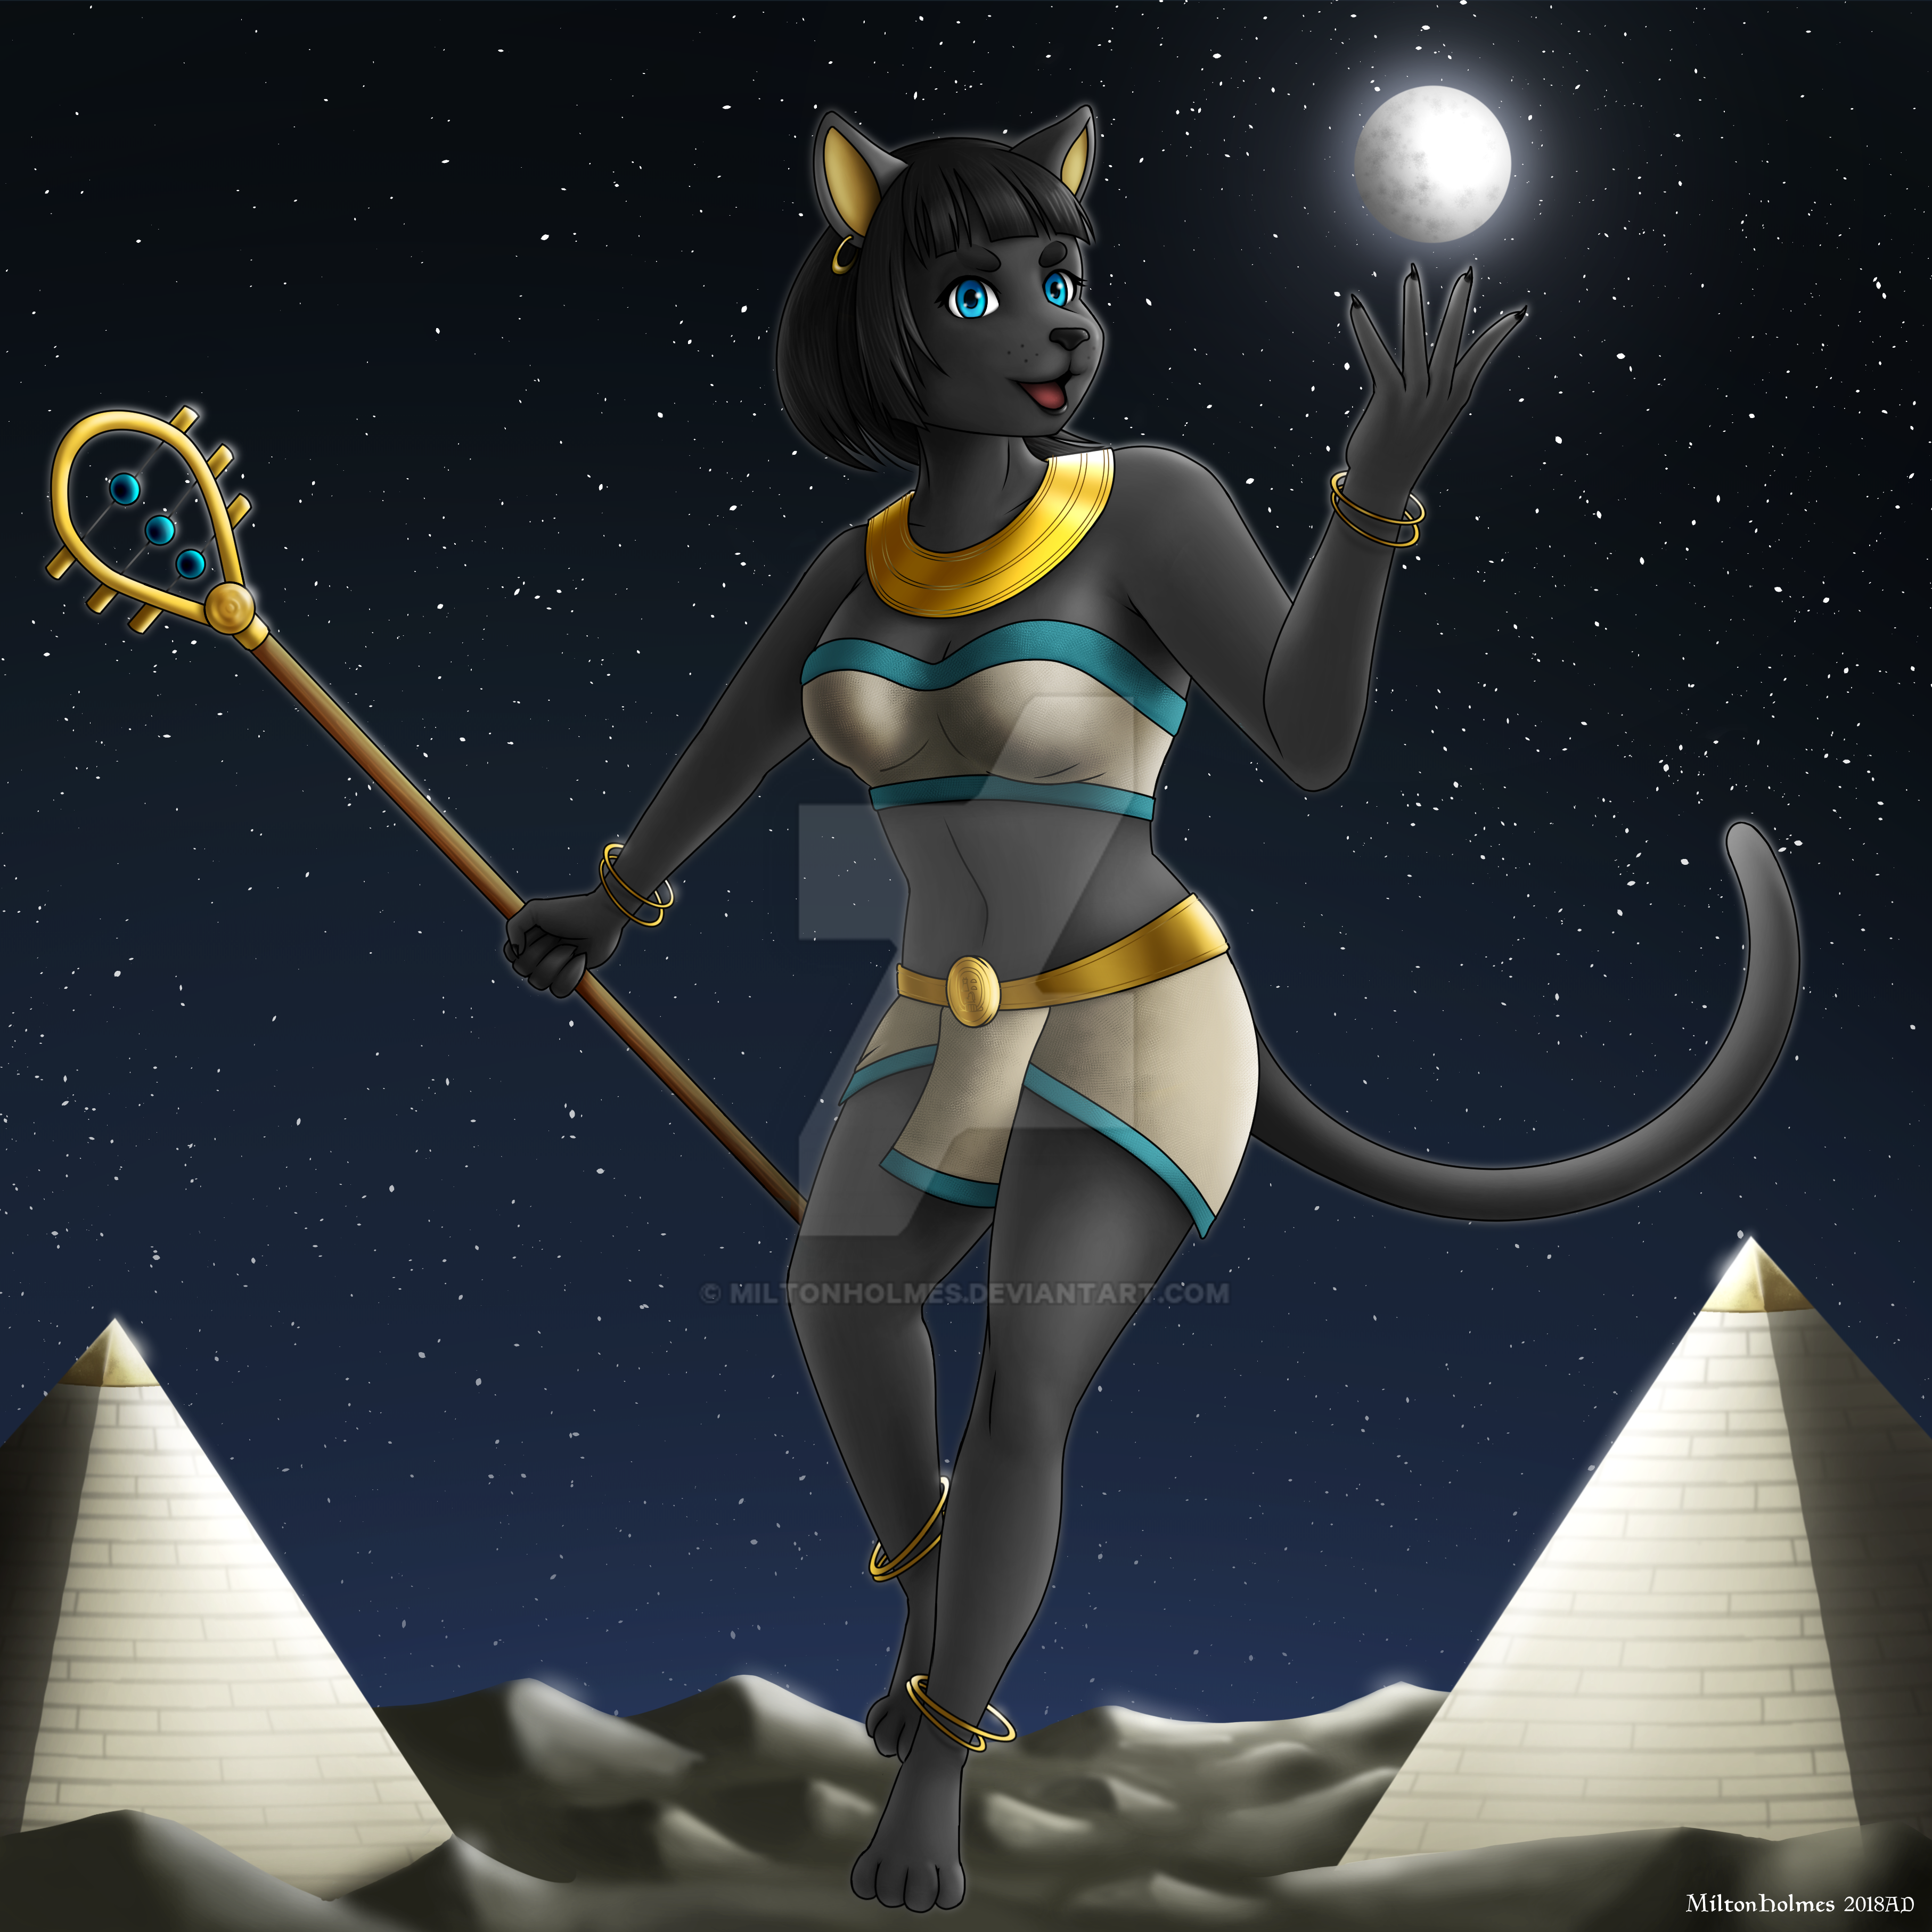 Баст казань. Бастет богиня. Bastet богиня Египта. Богиня Бастет в древнем Египте. Бастет богиня Египта фурри.